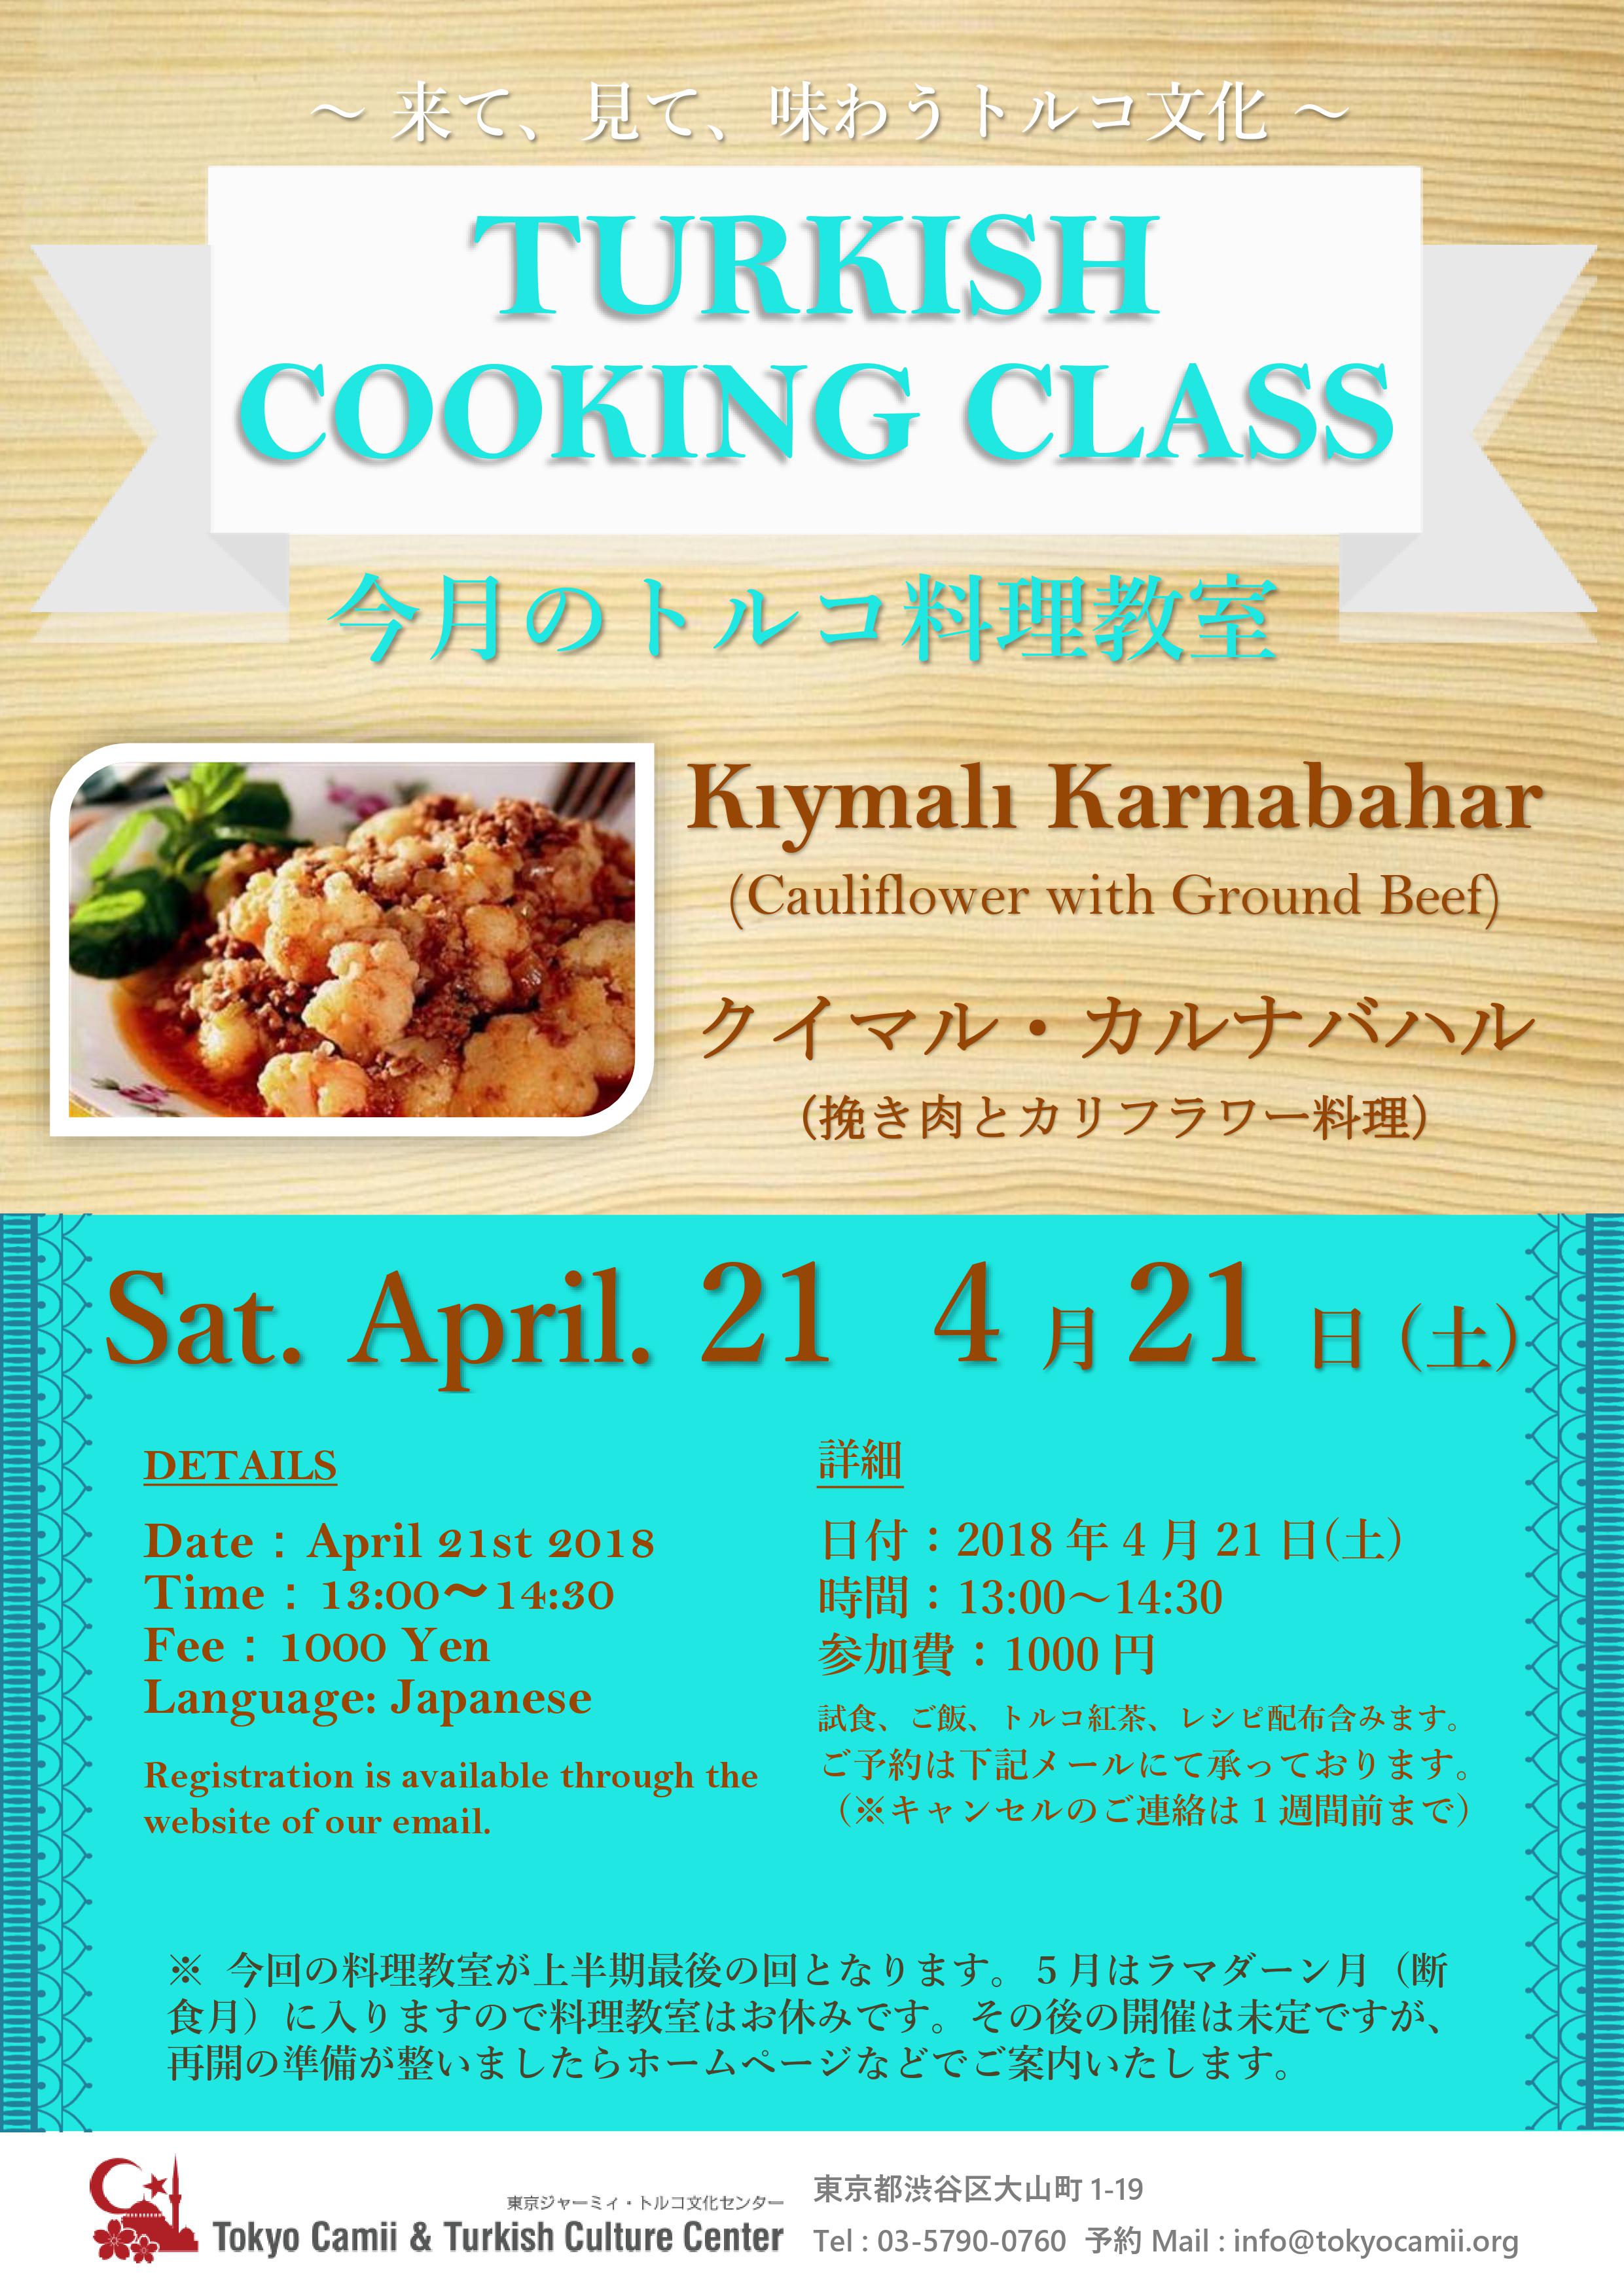 Tokyo Camii Diyanet Turkish Cult Ctr 東京ジャーミイ トルコ料理教室 Turkish Cooking Class 今回が今年上半期最後の料理教室です ラマダーン月 断食月 期間中 料理教室はお休みとなり 次回開催日は未定ですので 再開の場合はまたお知らせし